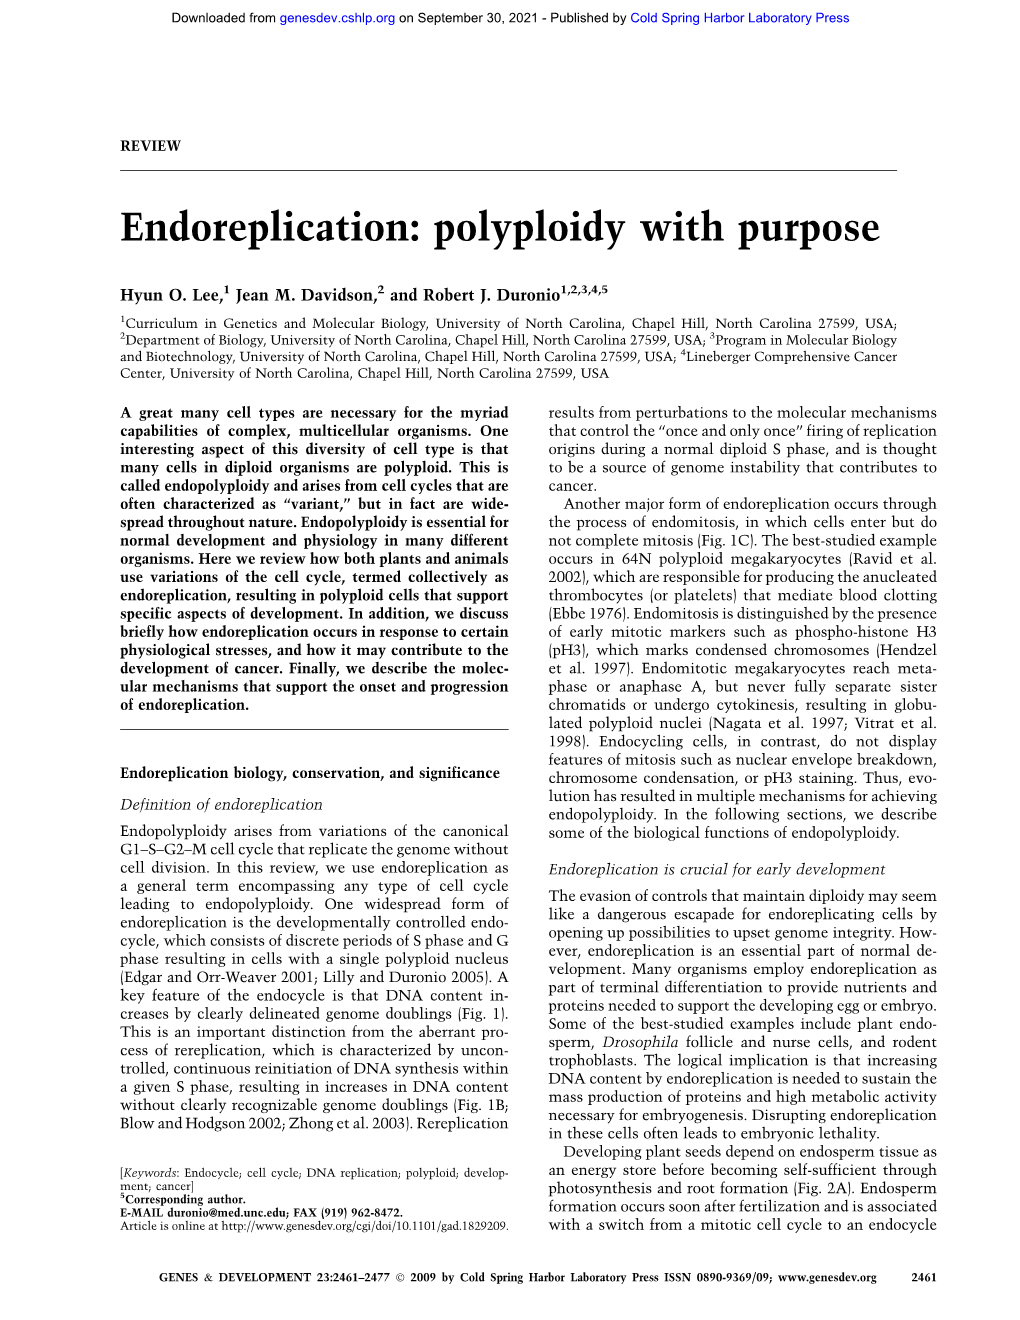 Endoreplication: Polyploidy with Purpose